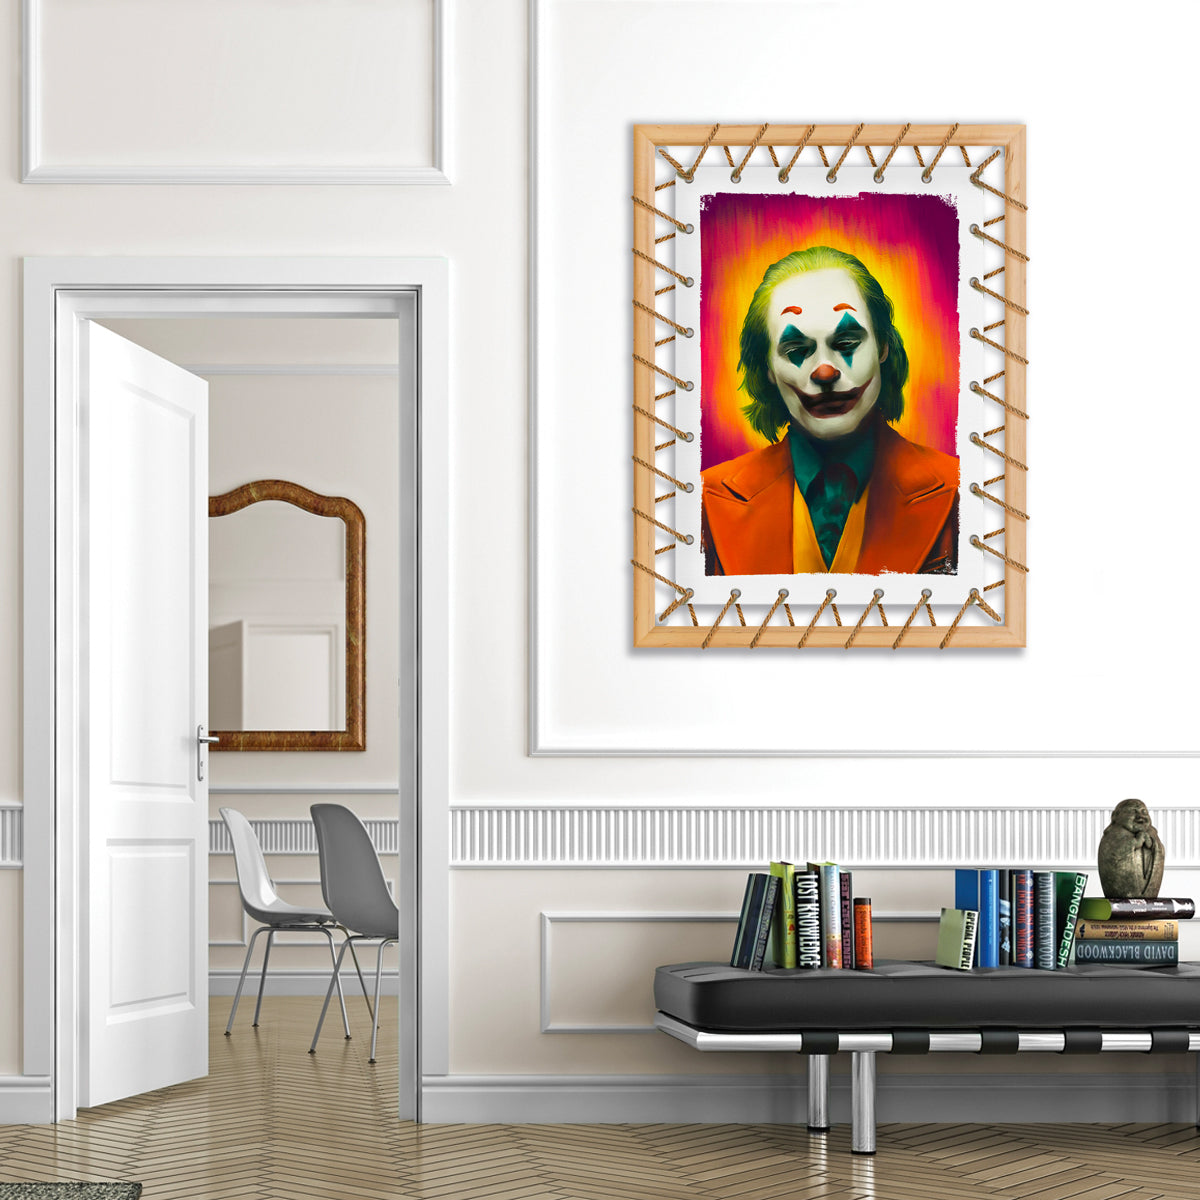 Tensotela 70x95 cm - Joker Portrait - PlastiWood(14558249)